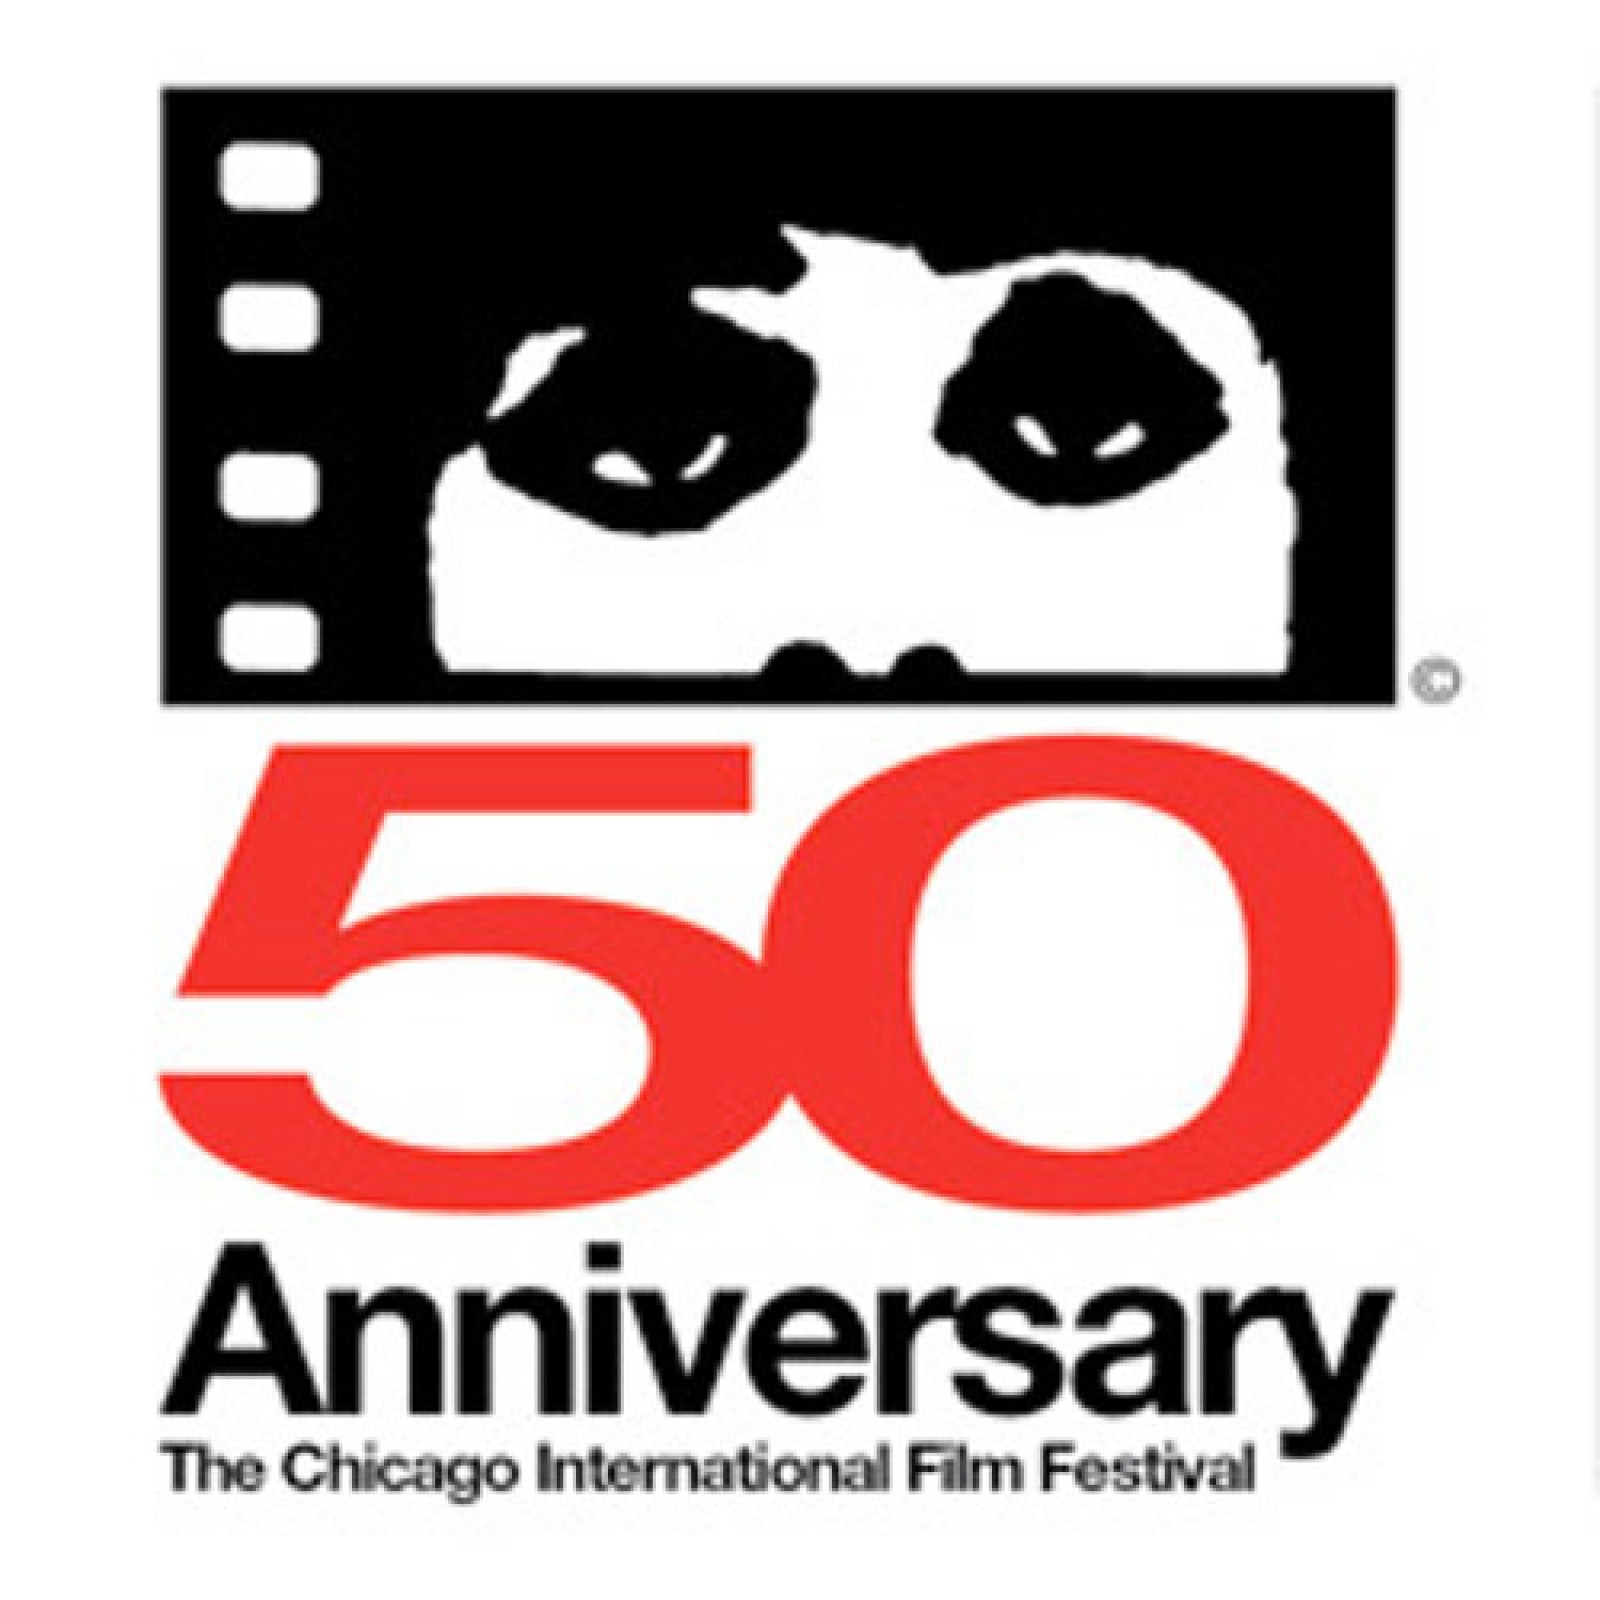 Chicago International Film Festival celebrates 50 years WBEZ Chicago